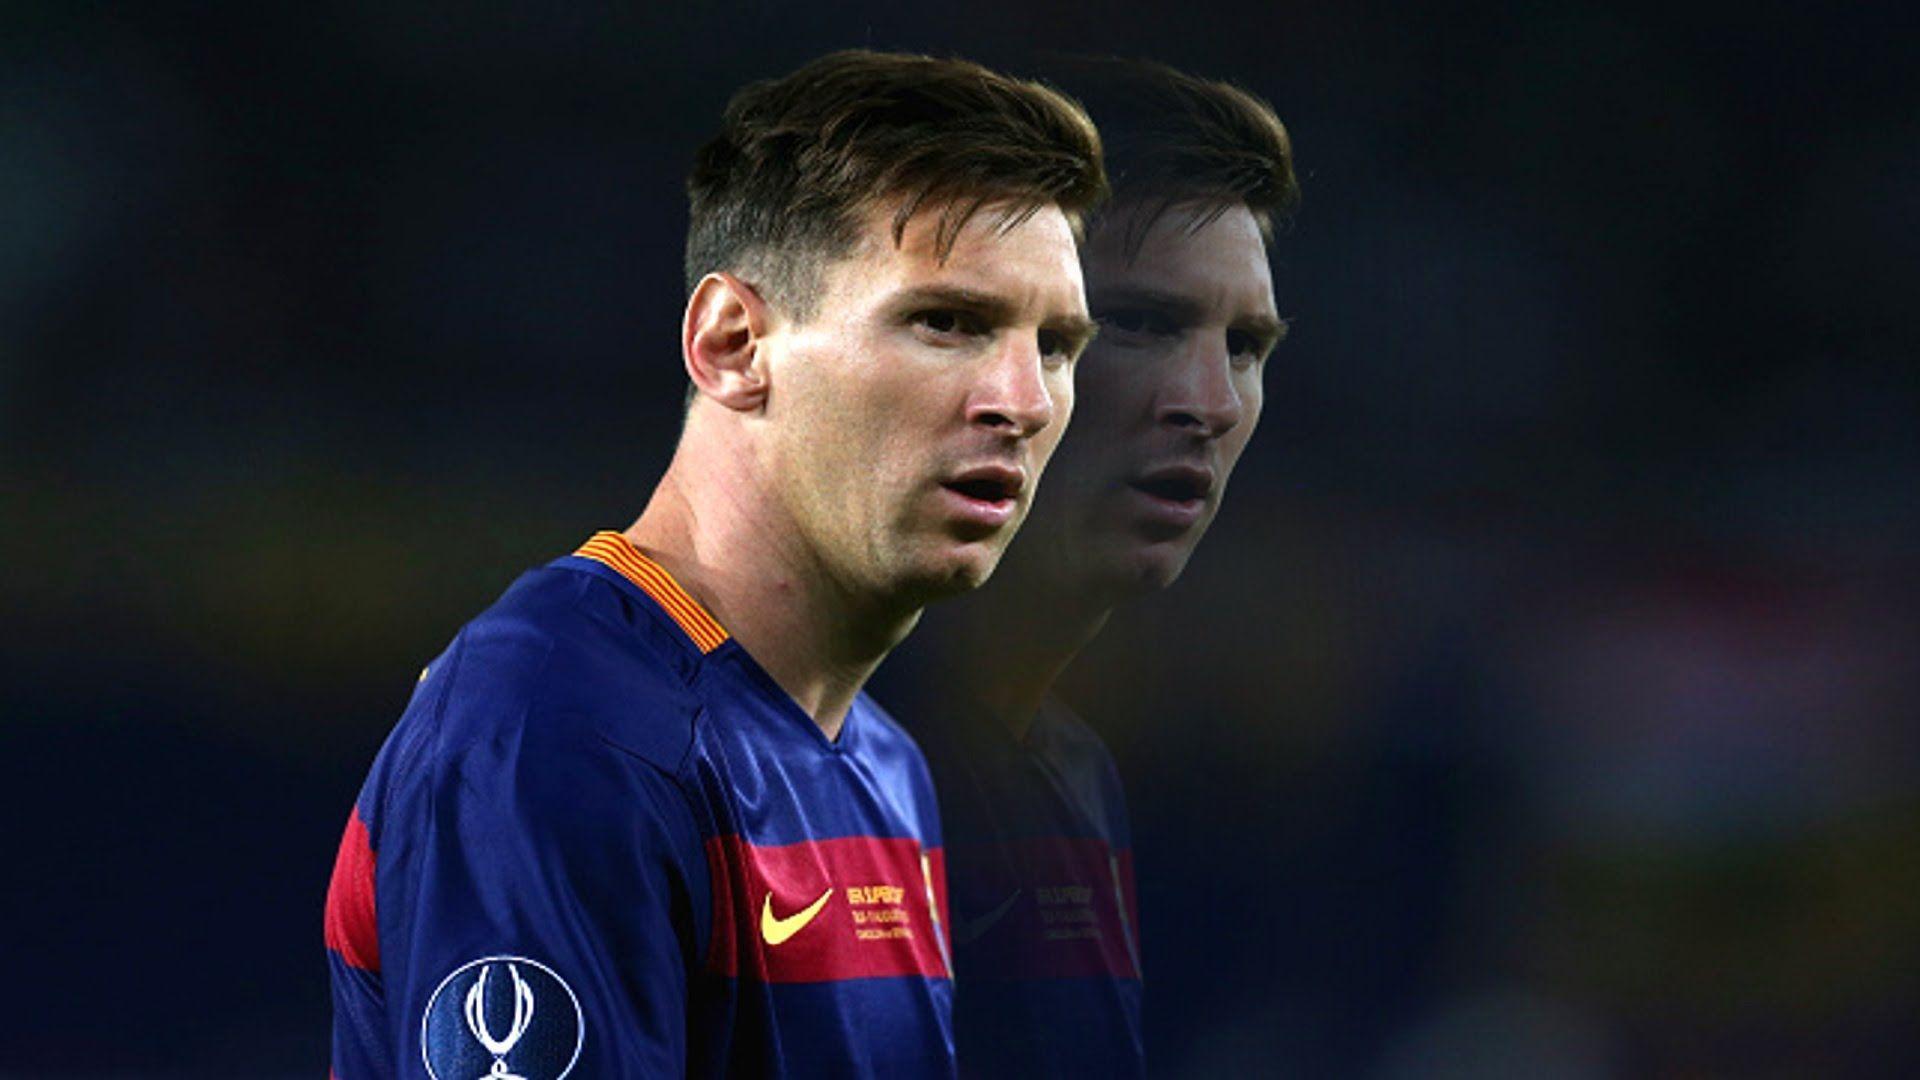 Lionel Messi Wallpaper full HD download free